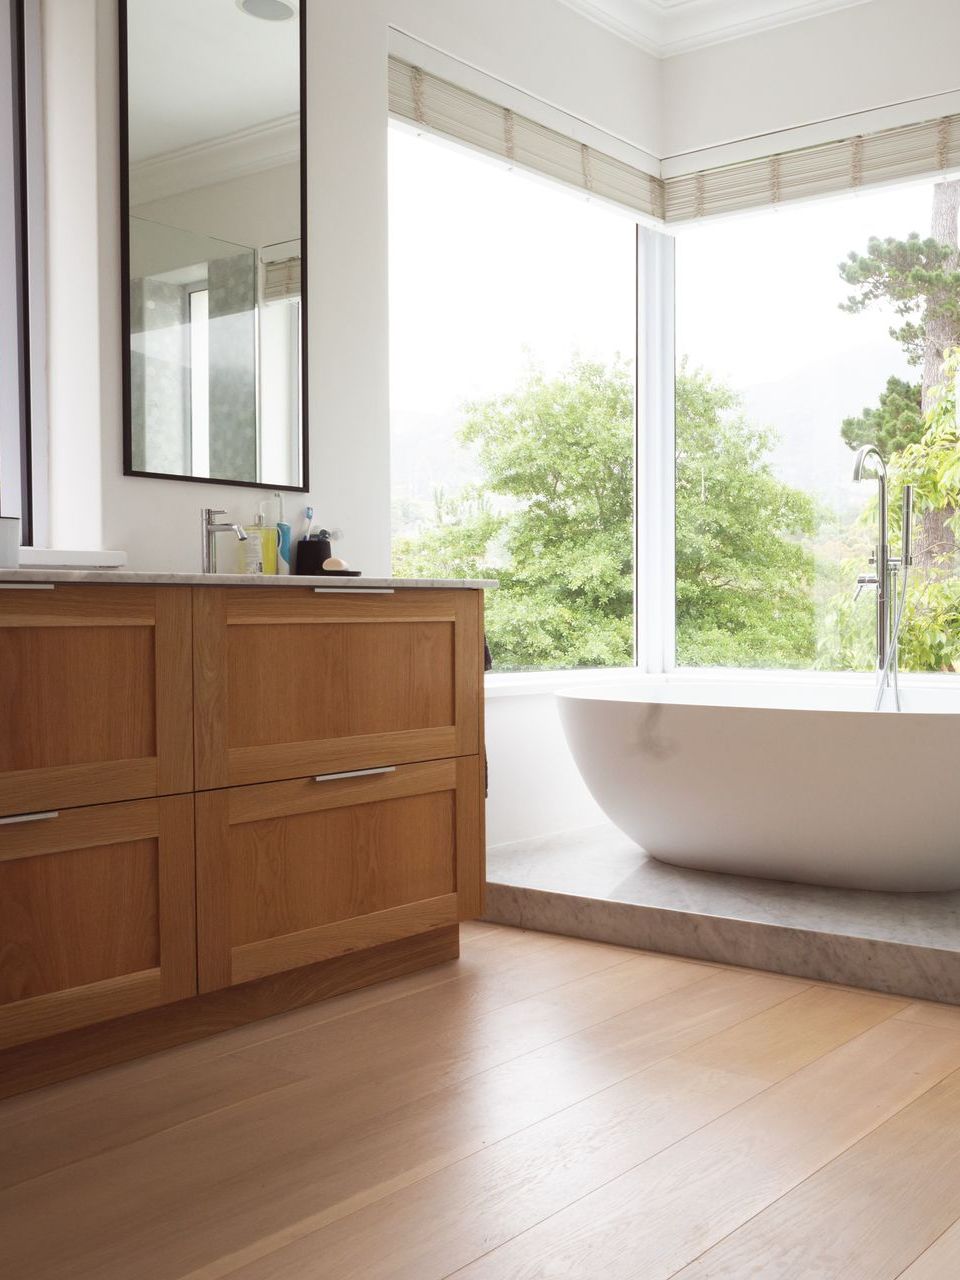 modern interior design of bathroom with wood floors